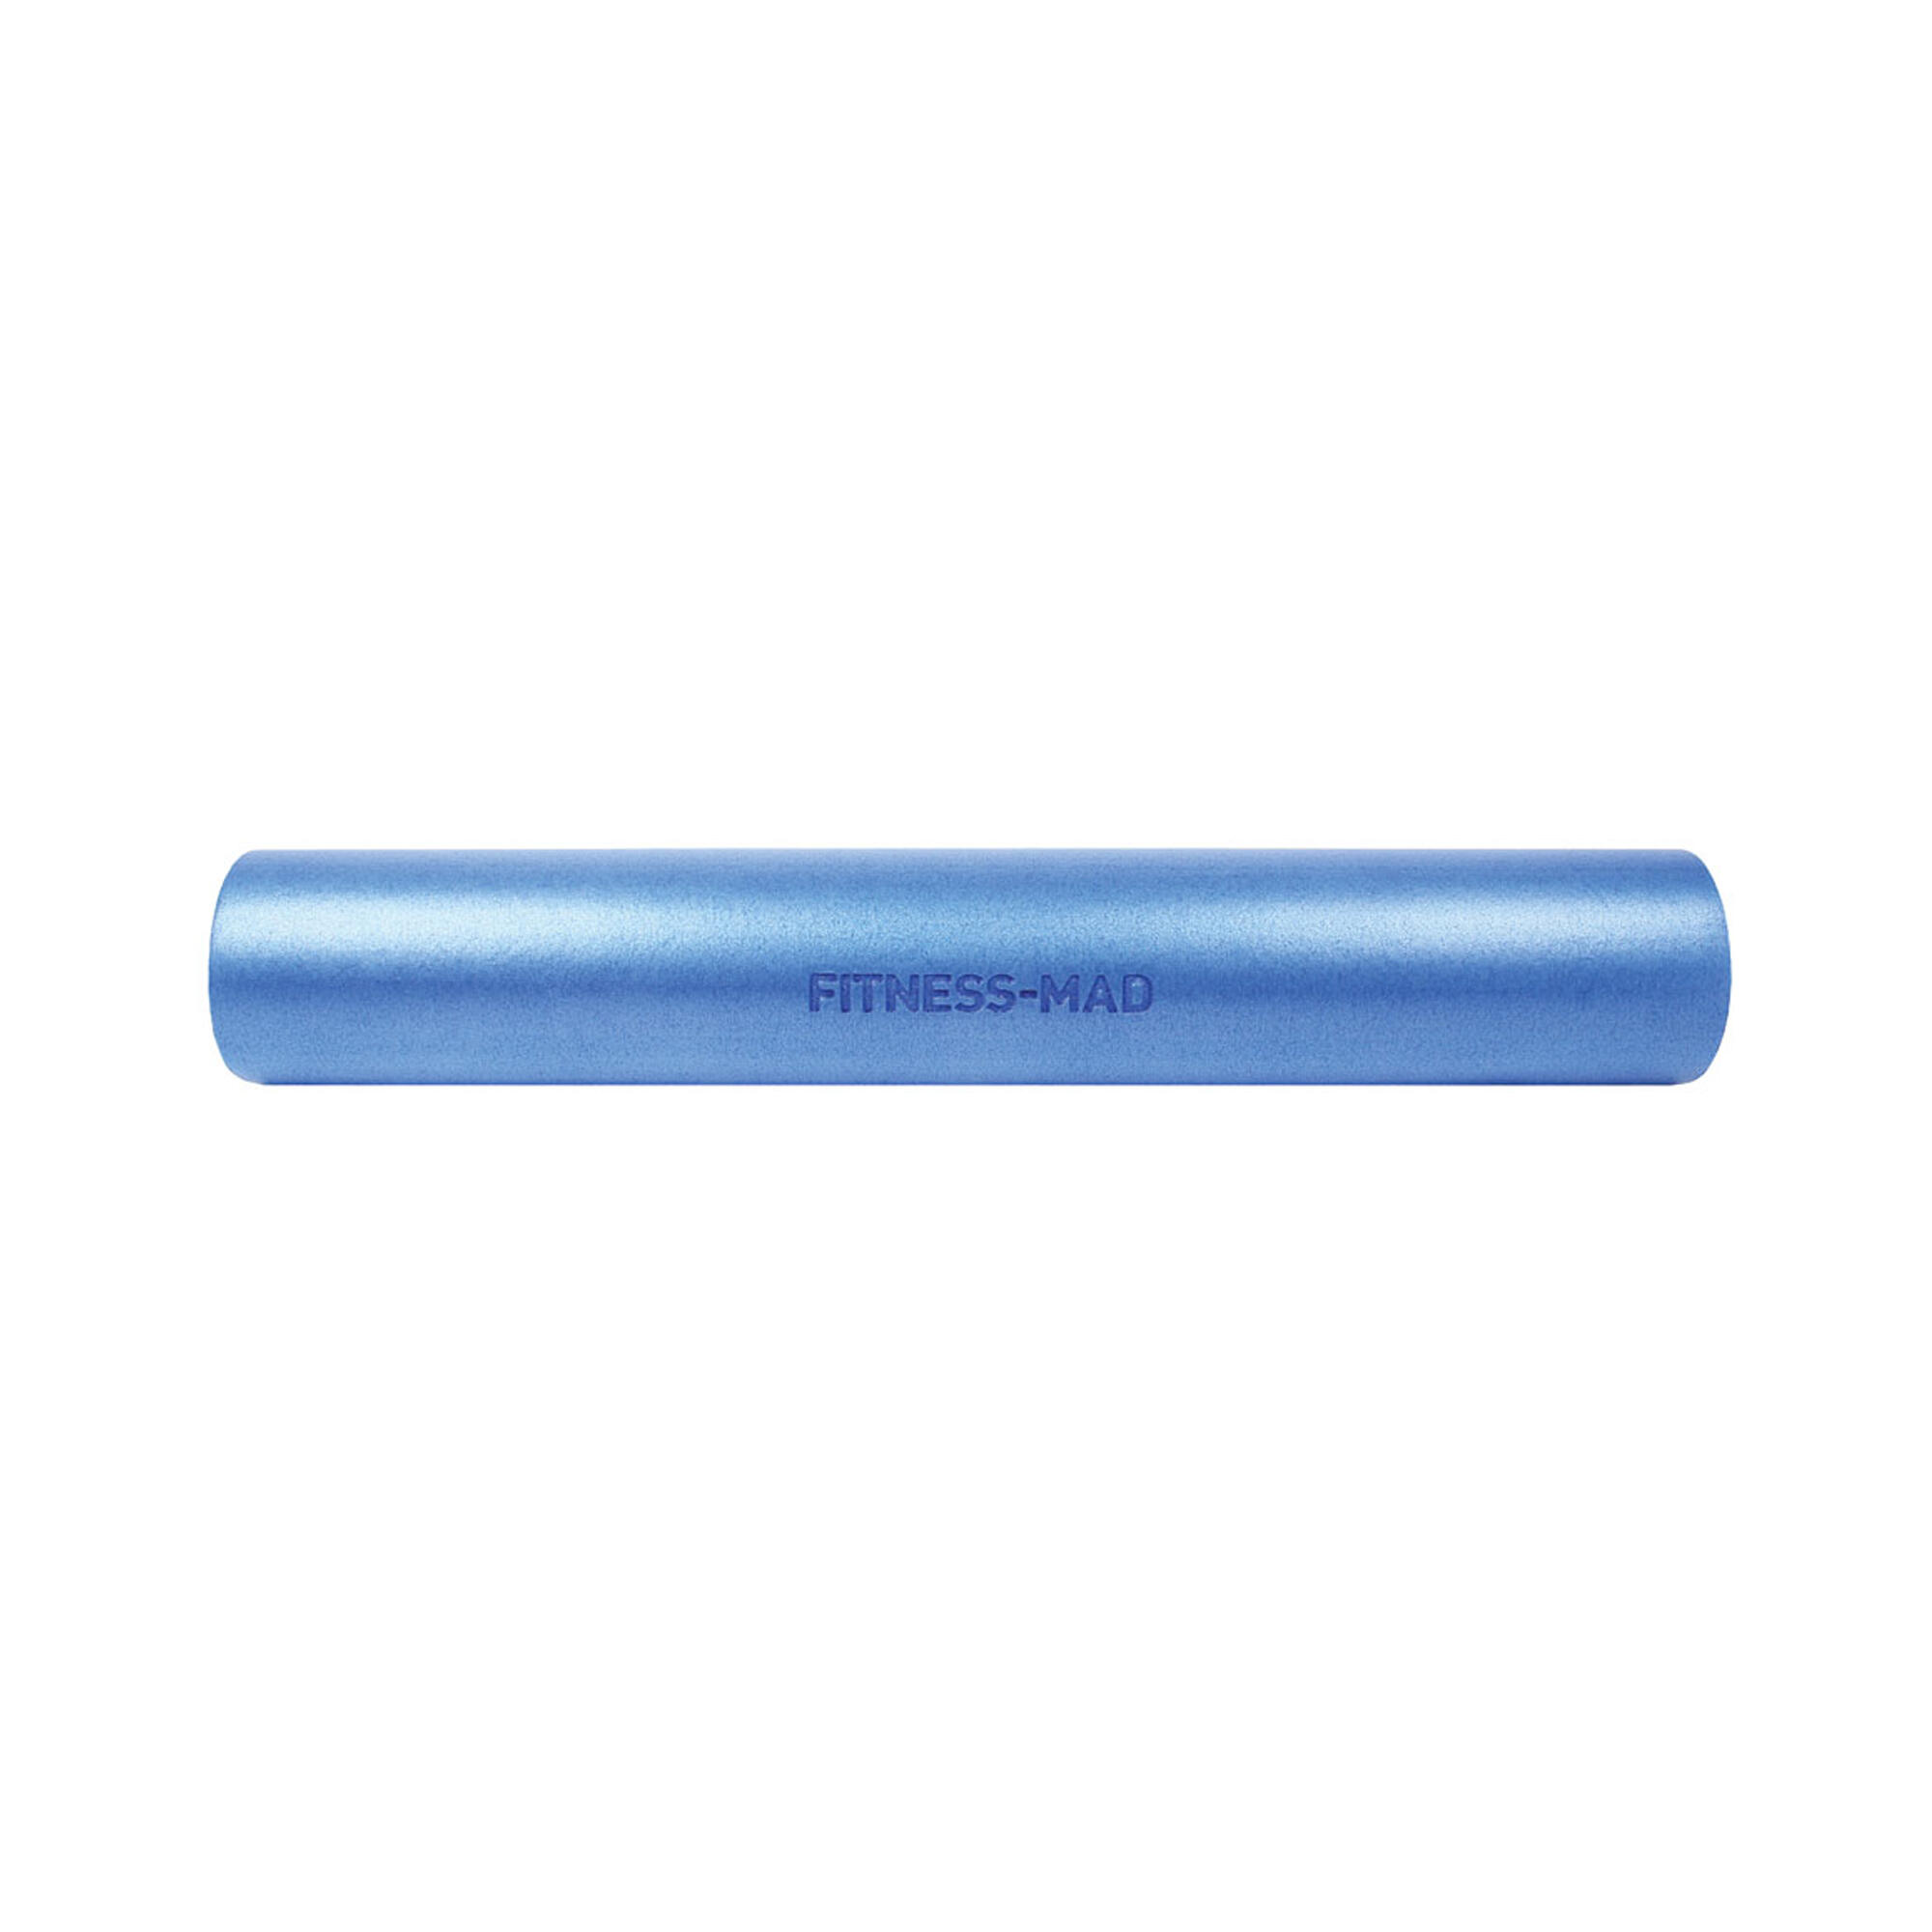 FITNESS-MAD Foam Muscle Roller (Blue)